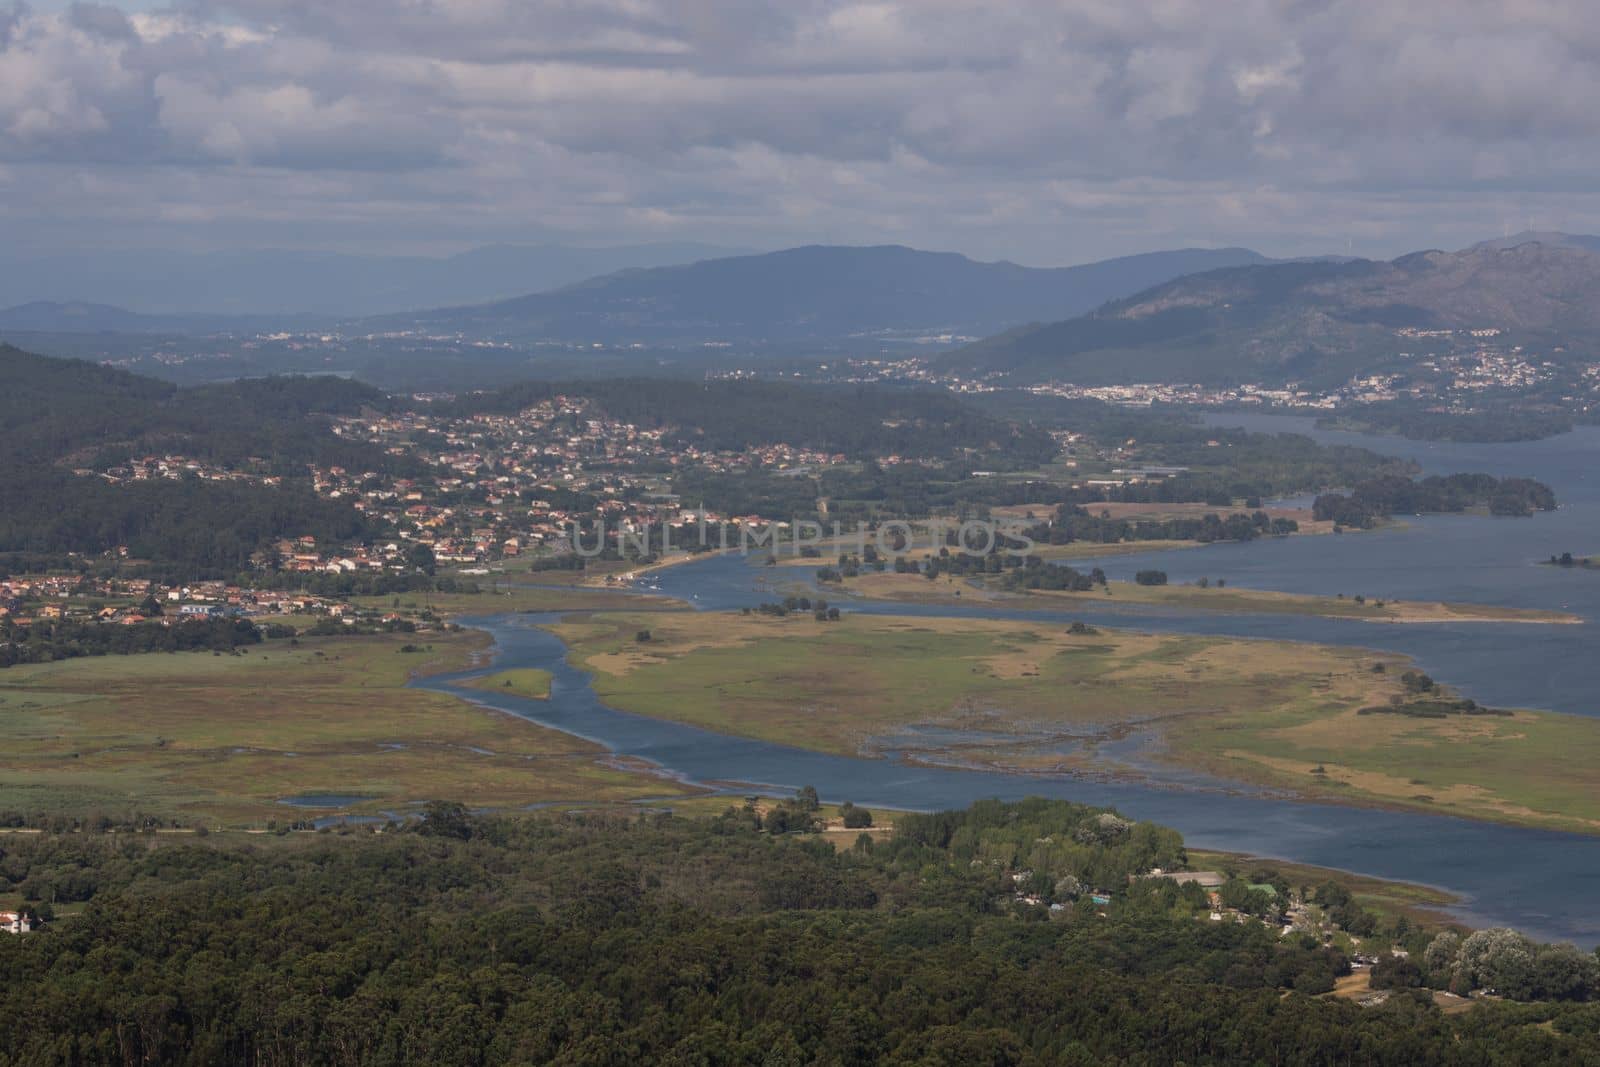 Minho river mouth from mount Santa Trega, in A Guarda, Galicia. High quality photo